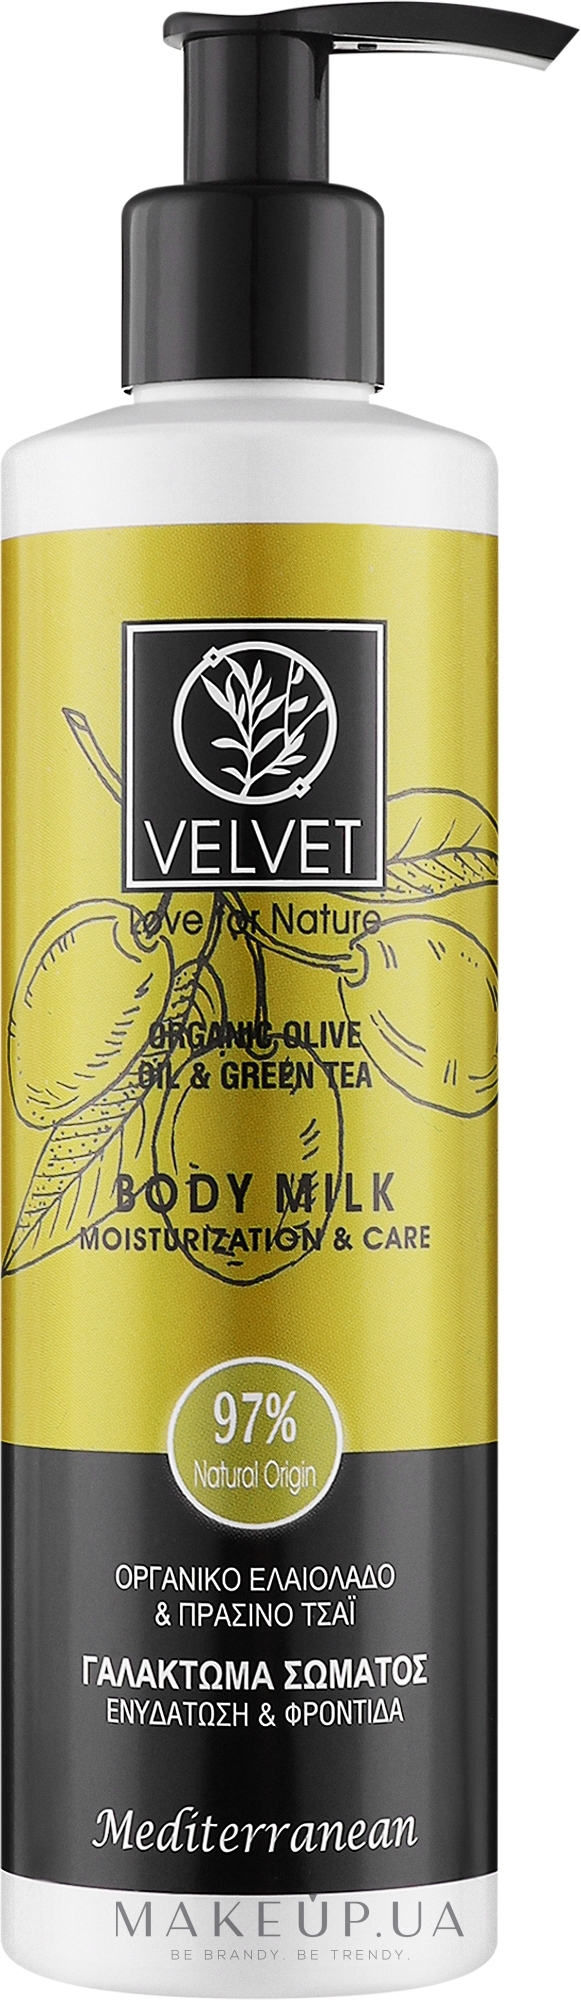 Молочко для увлажнения и ухода за телом - Velvet Love for Nature Organic Olive & Green Tea Body Milk — фото 250ml